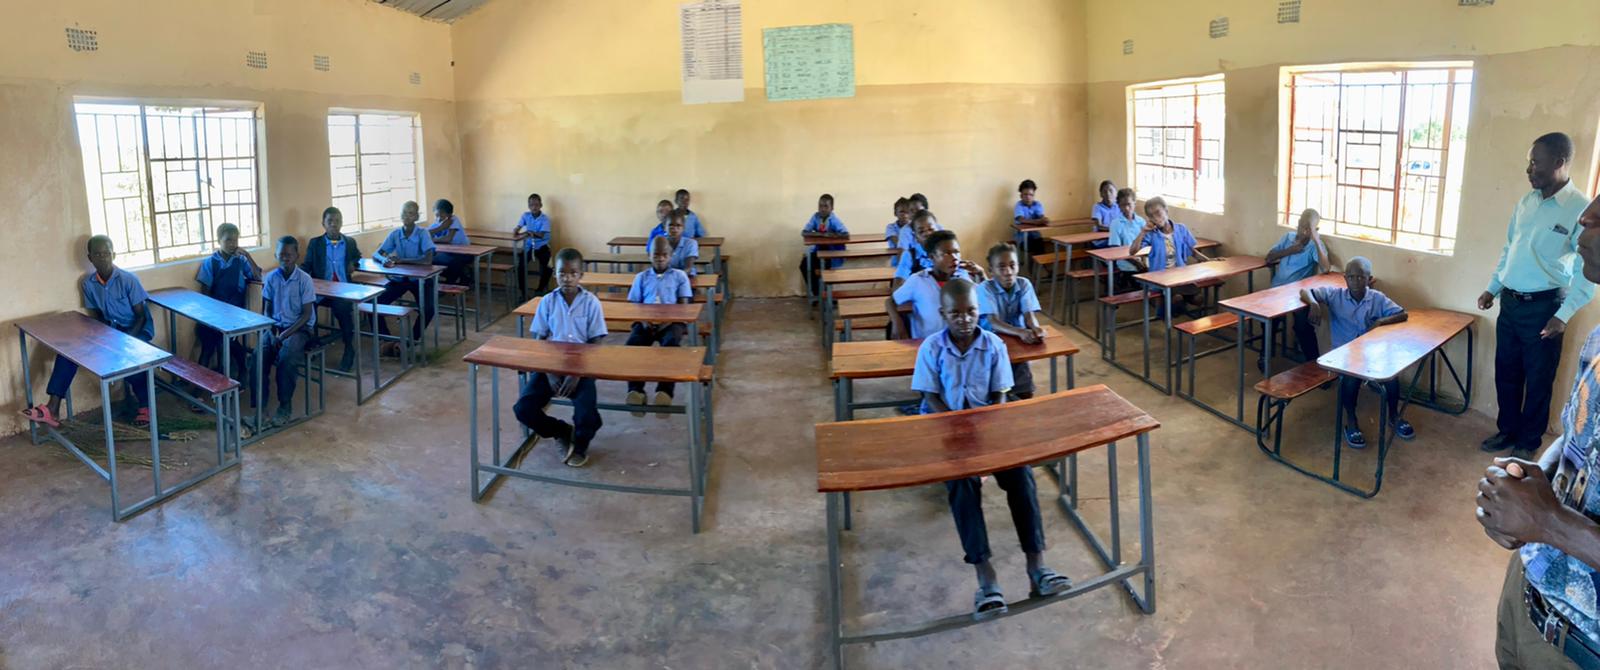 chikulu students at desks